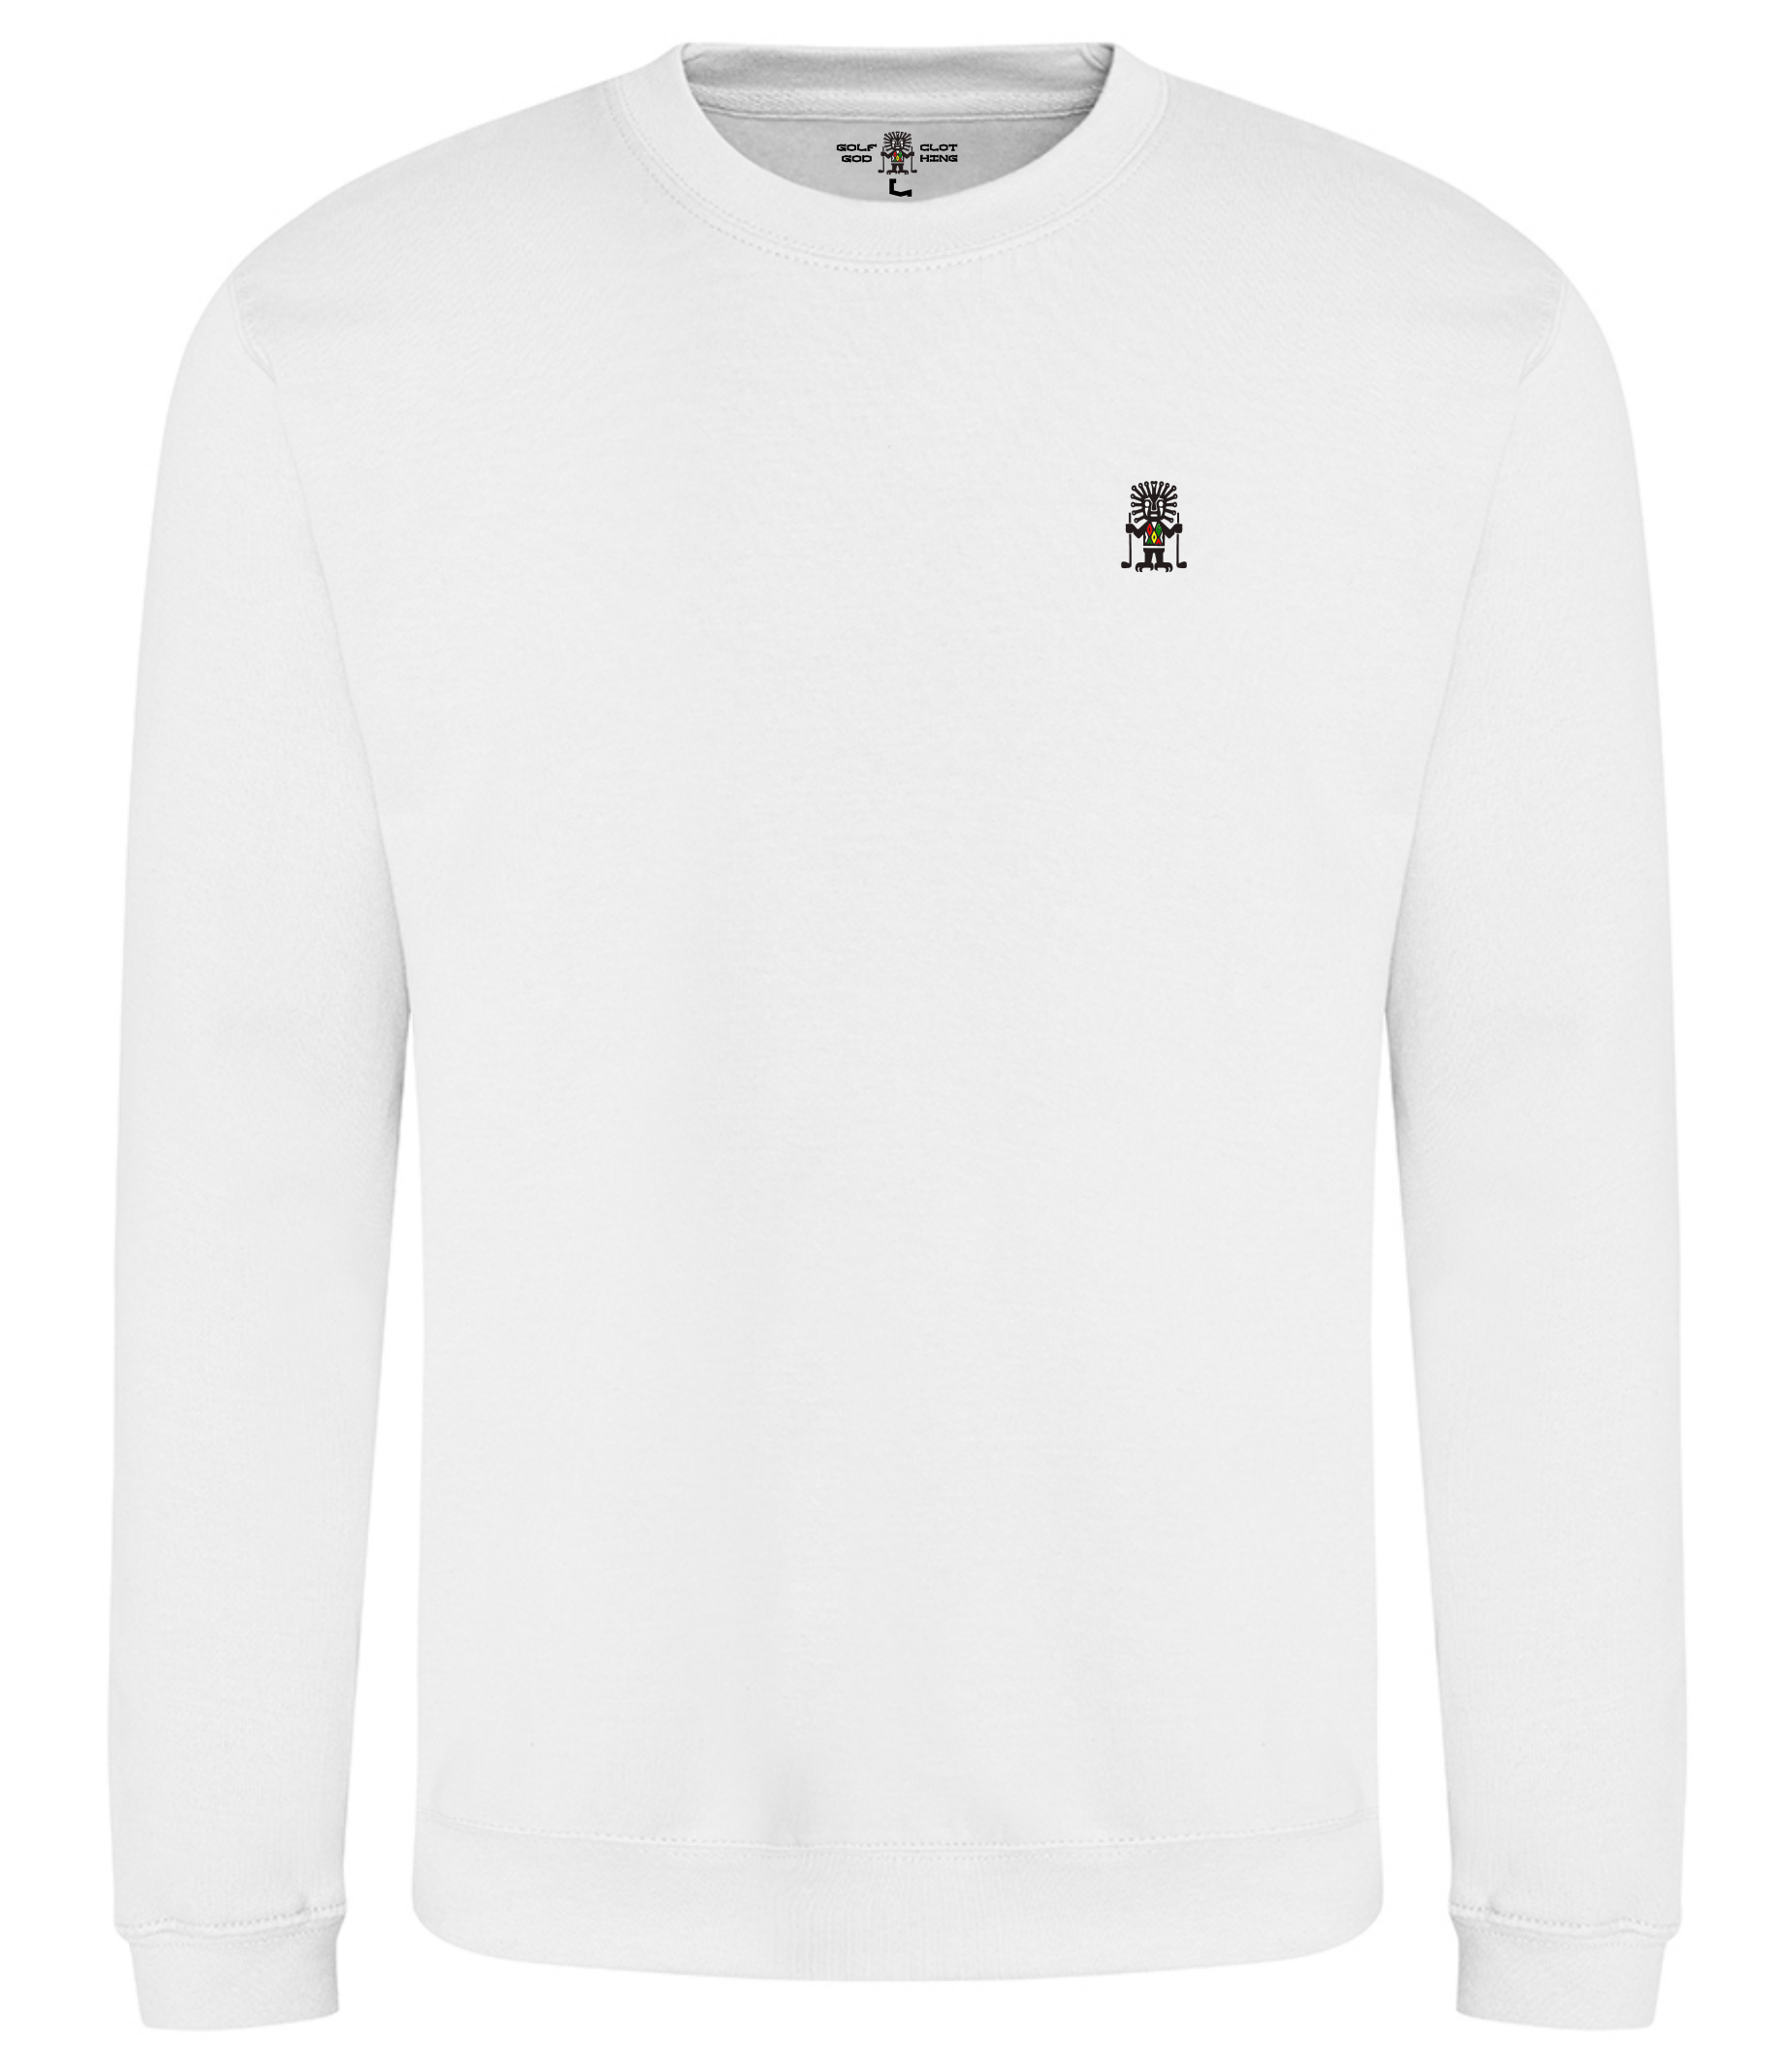 golf god clothing white classic sweatshirt